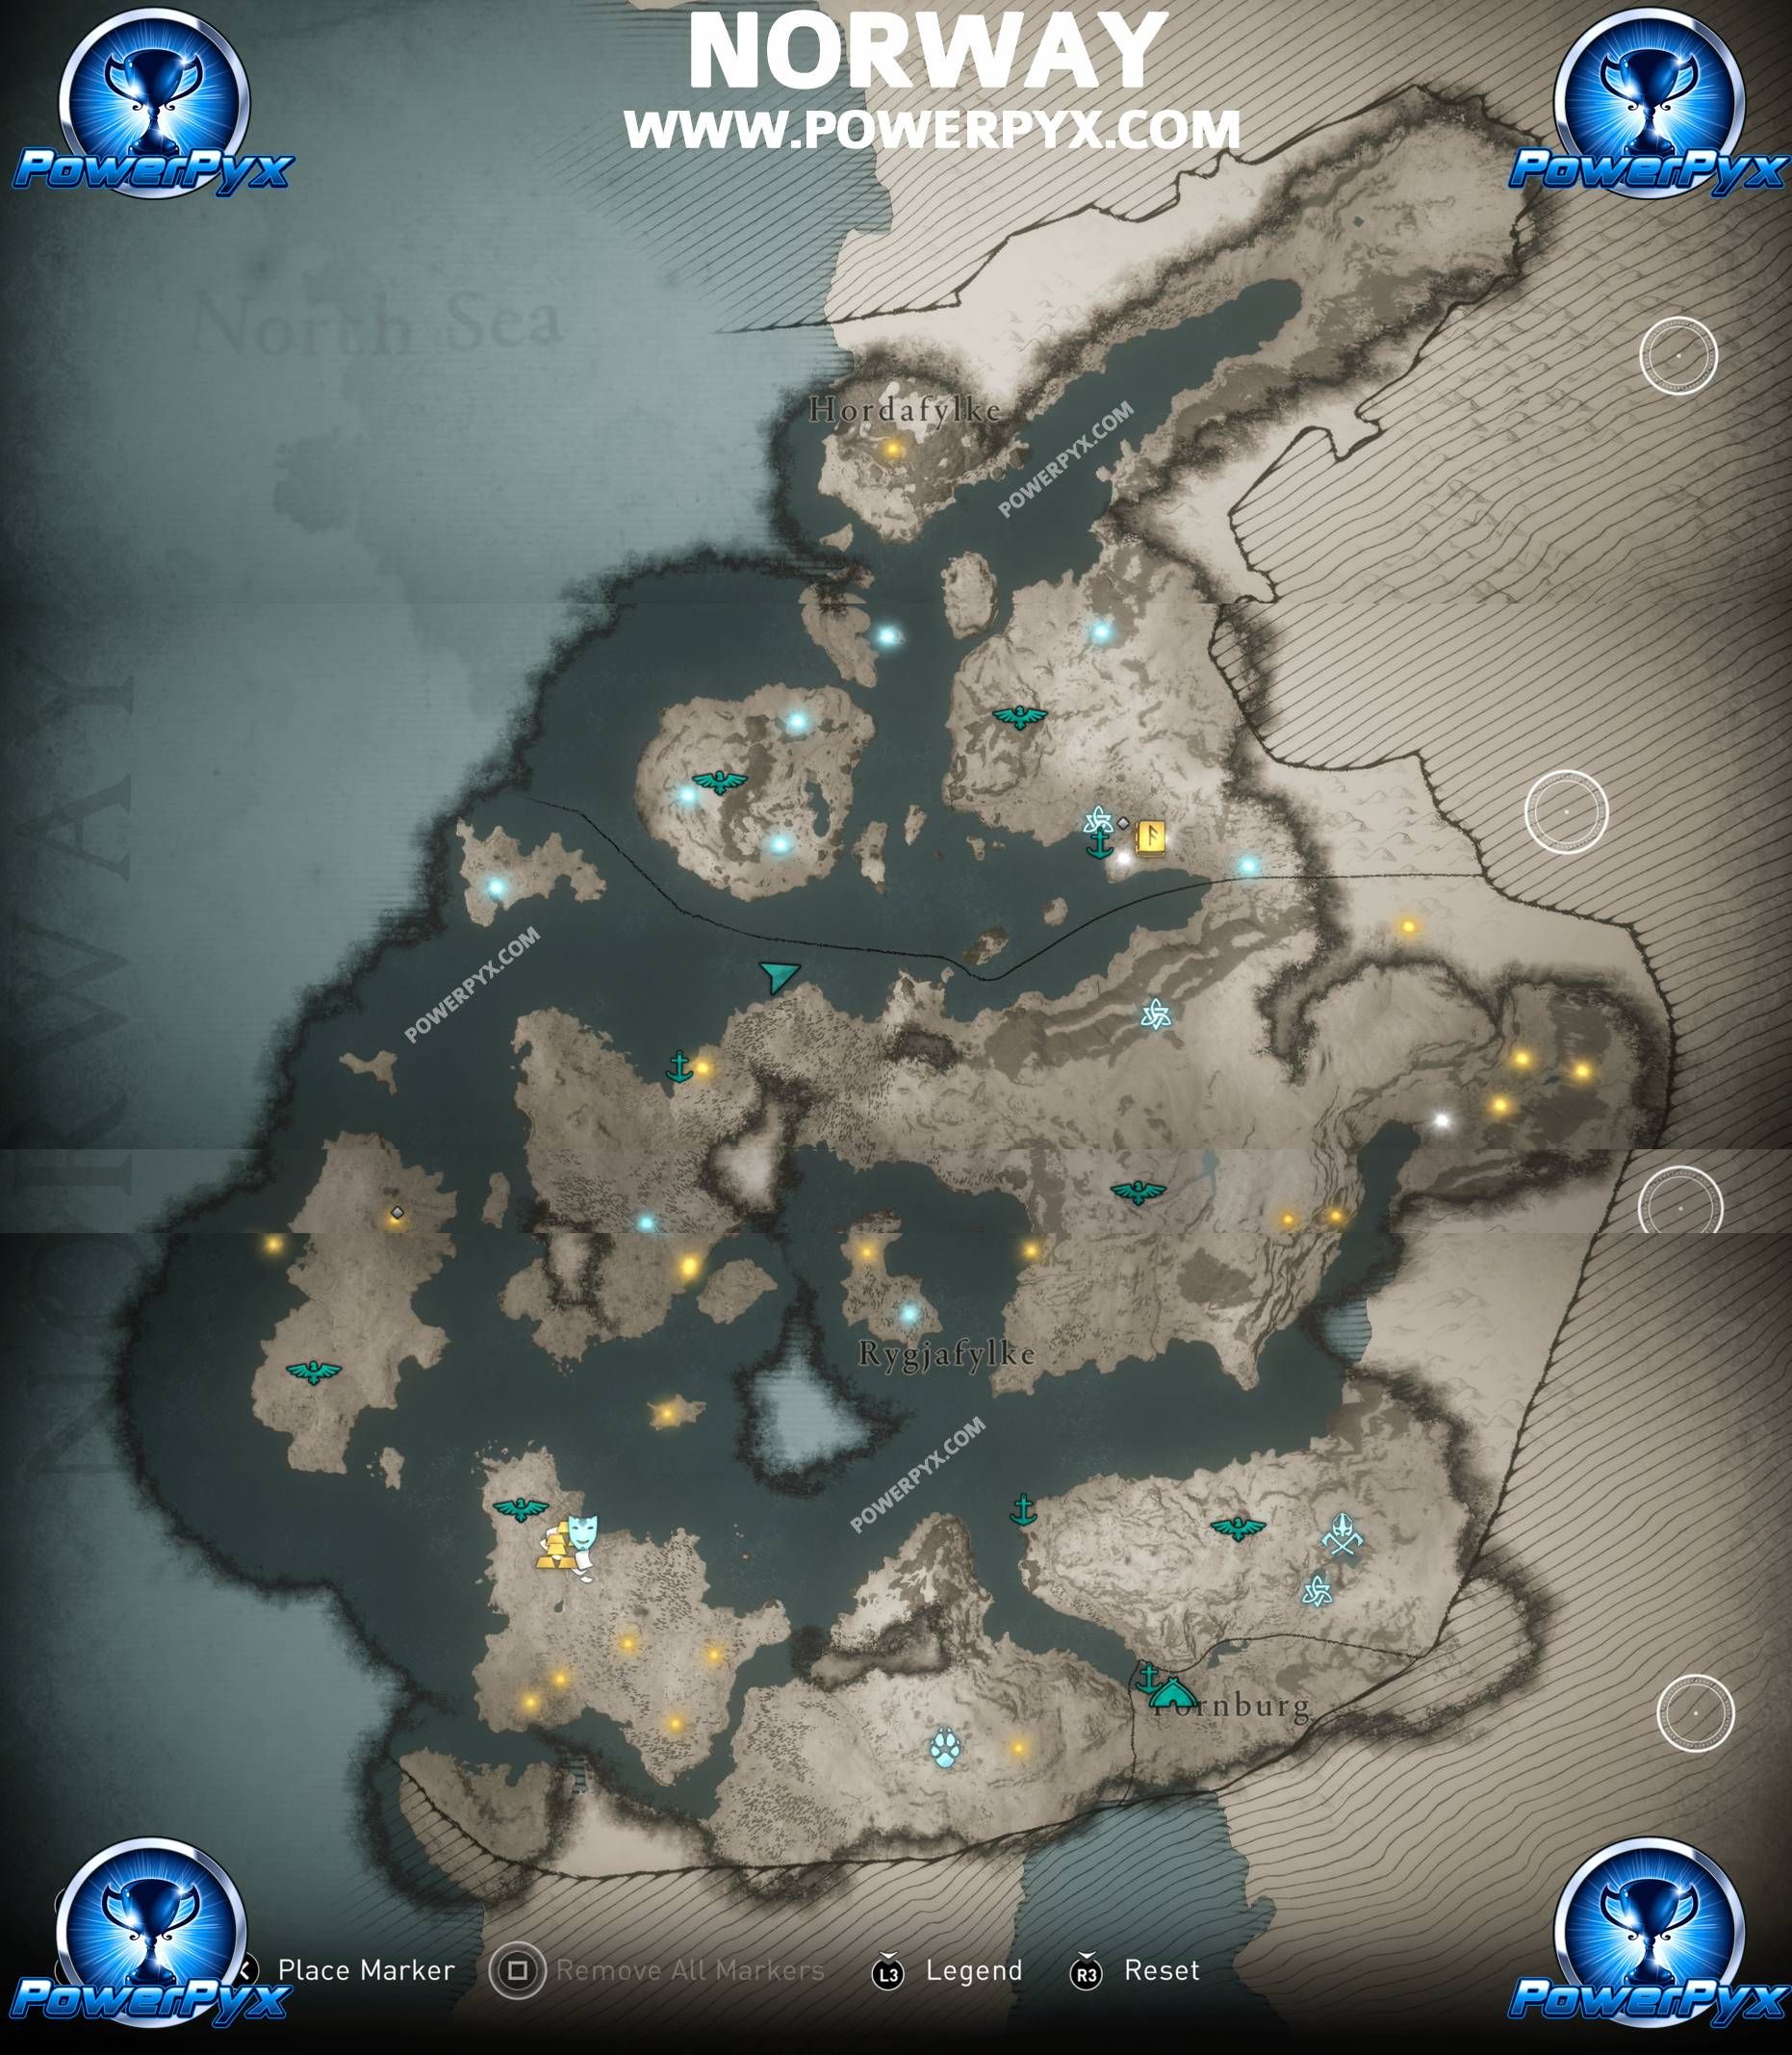 Assassins Creed Valhalla Full Map Revealed (Including Asgard Jotunheim)